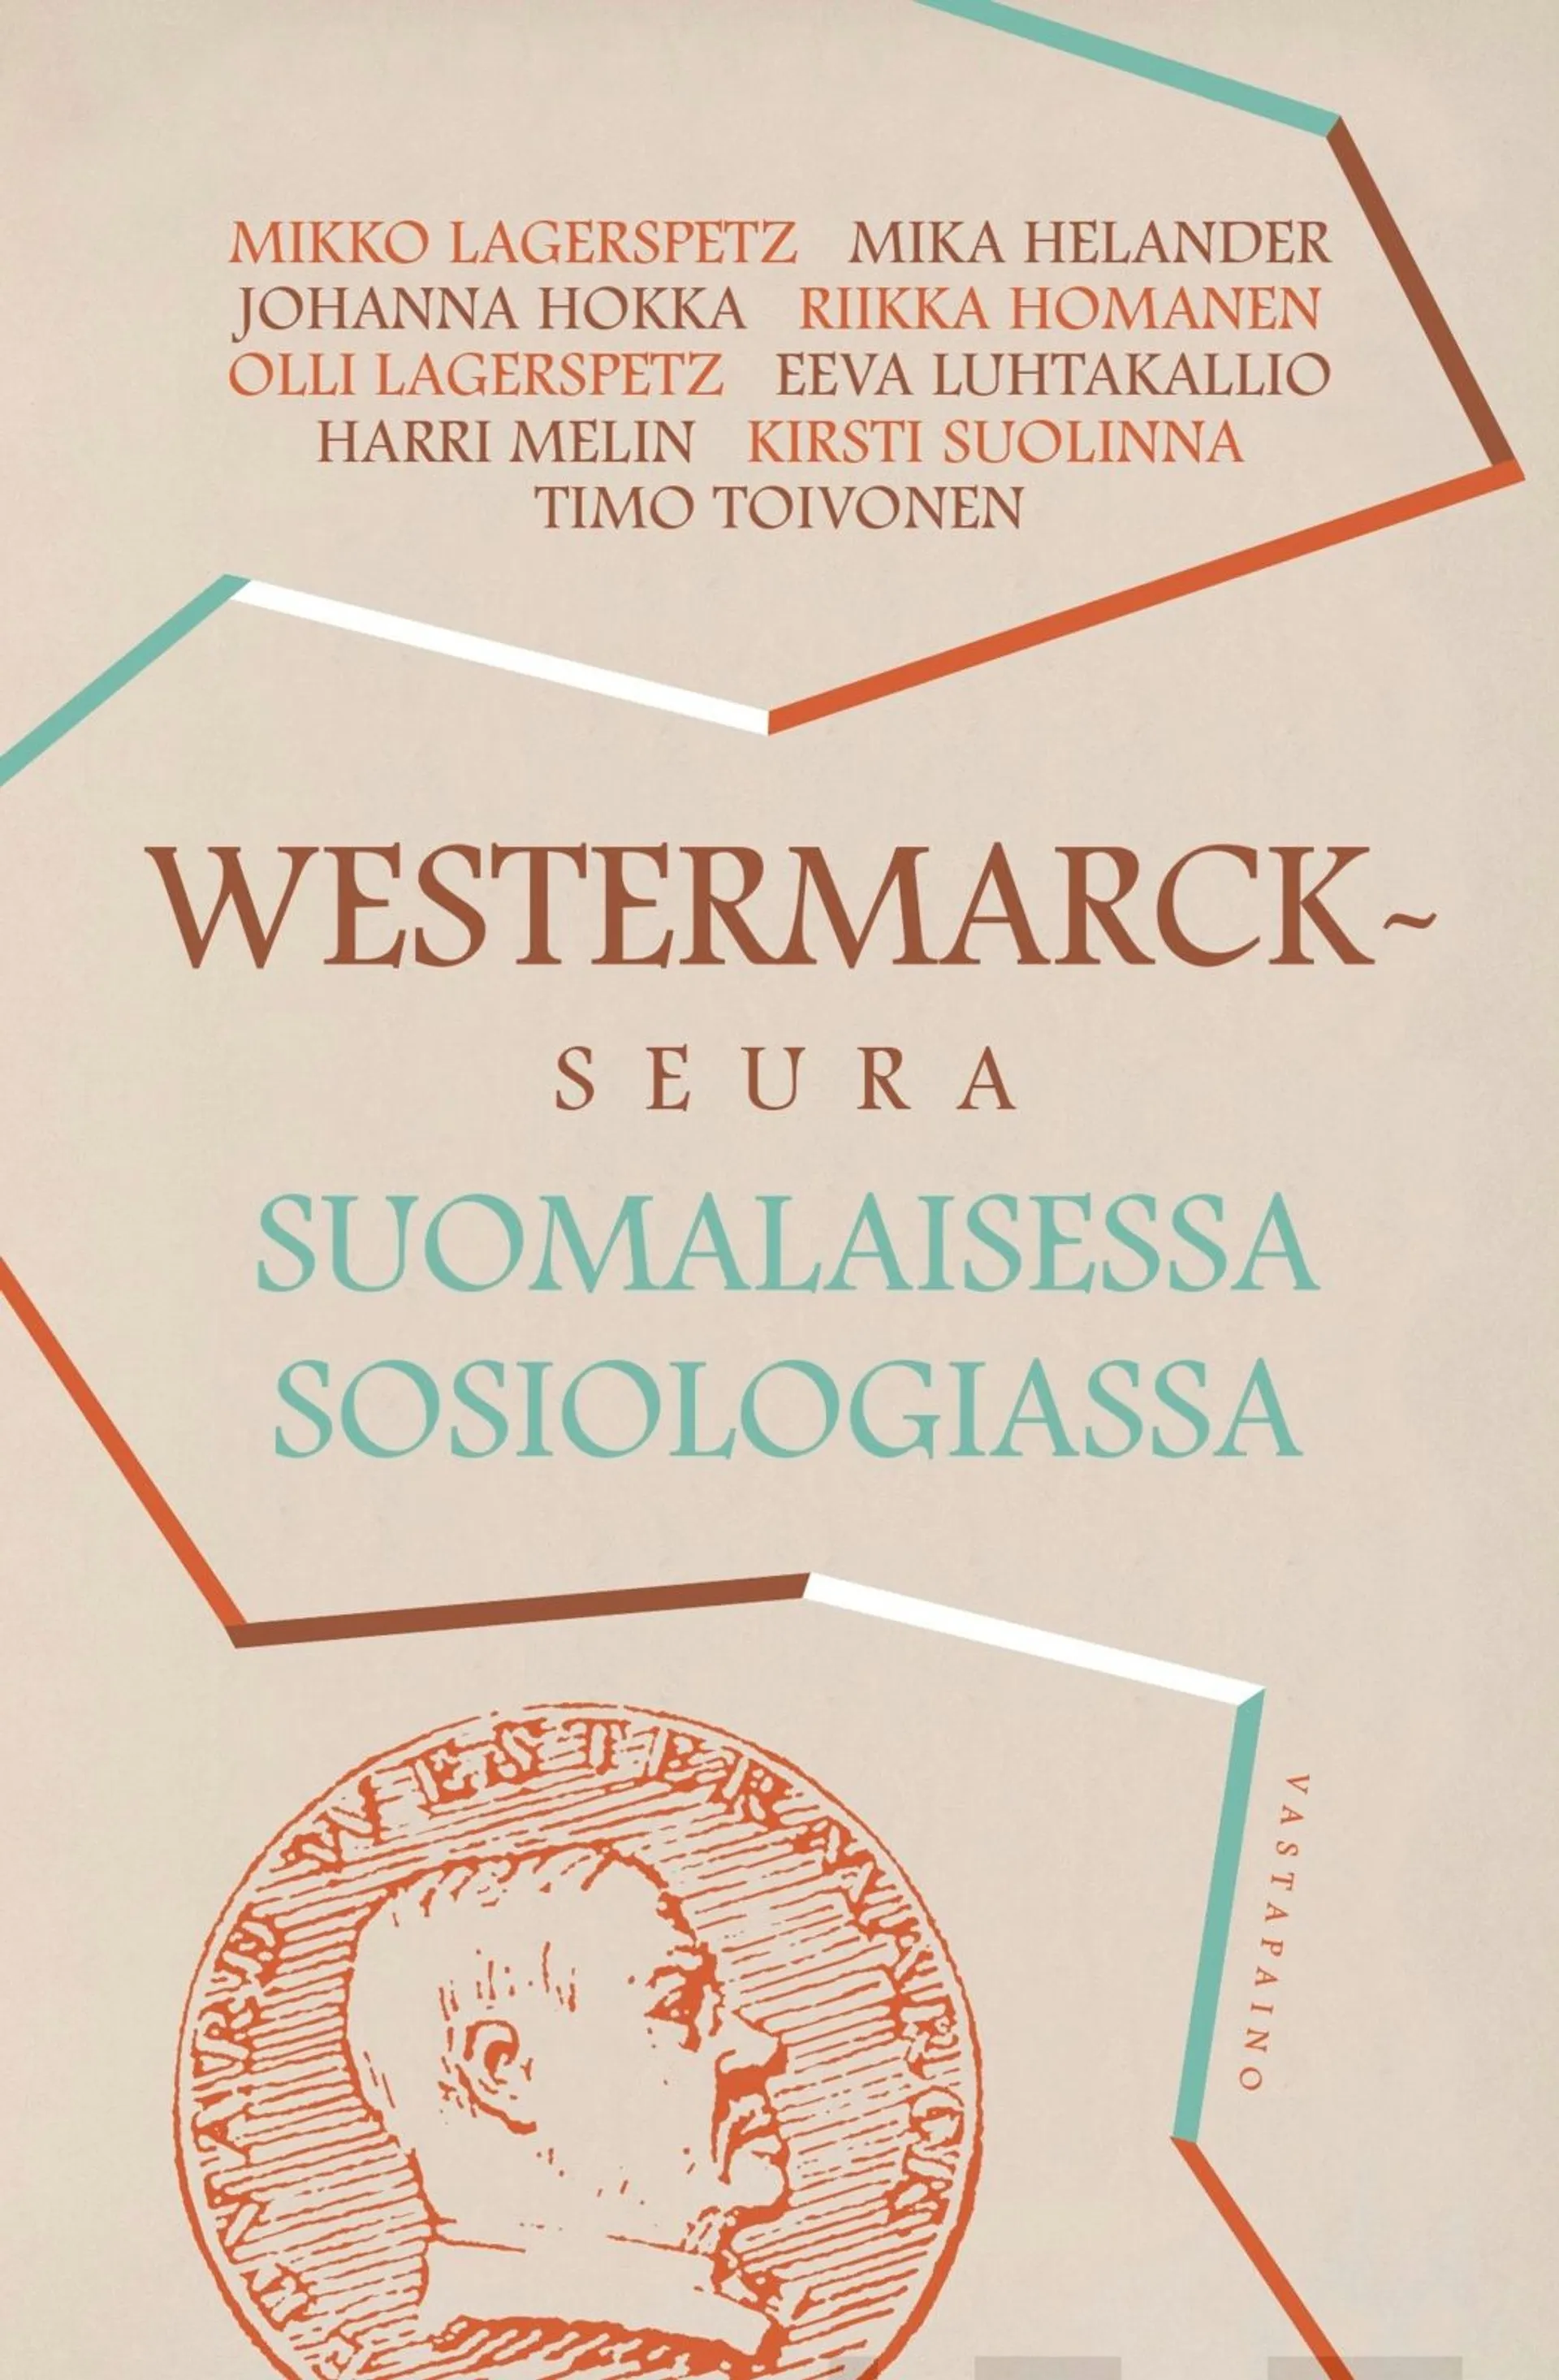 Lagerspetz, Westermarck-seura suomalaisessa sosiologiassa